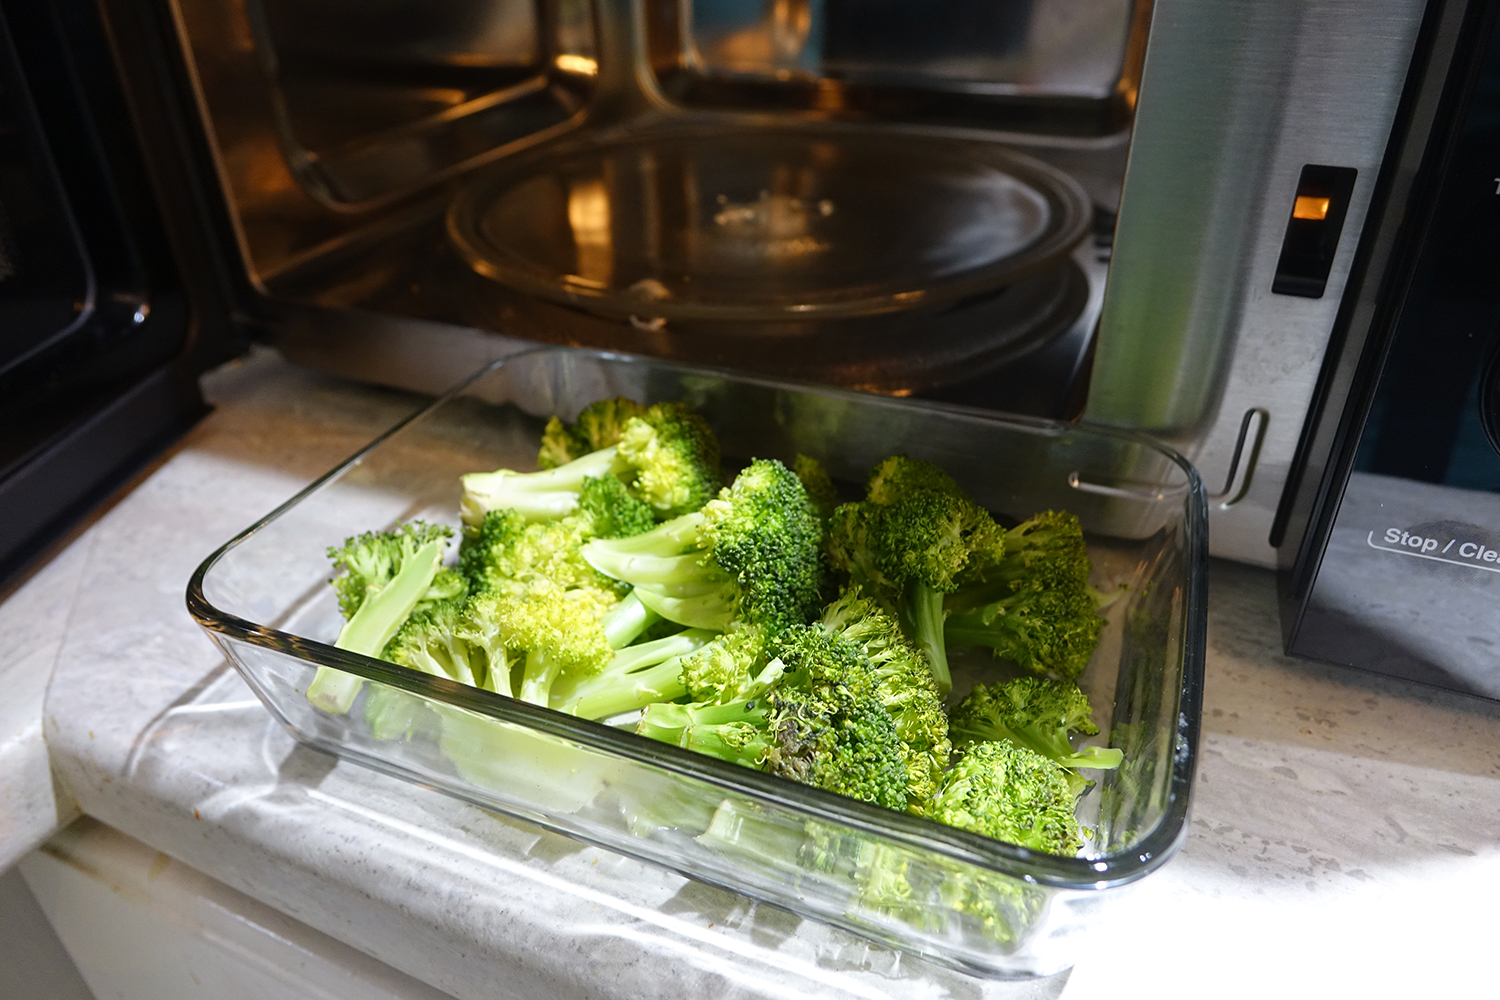 https://blog.bestbuy.ca/wp-content/uploads/2021/06/cuisinart-air-fryer-broccoli.jpg